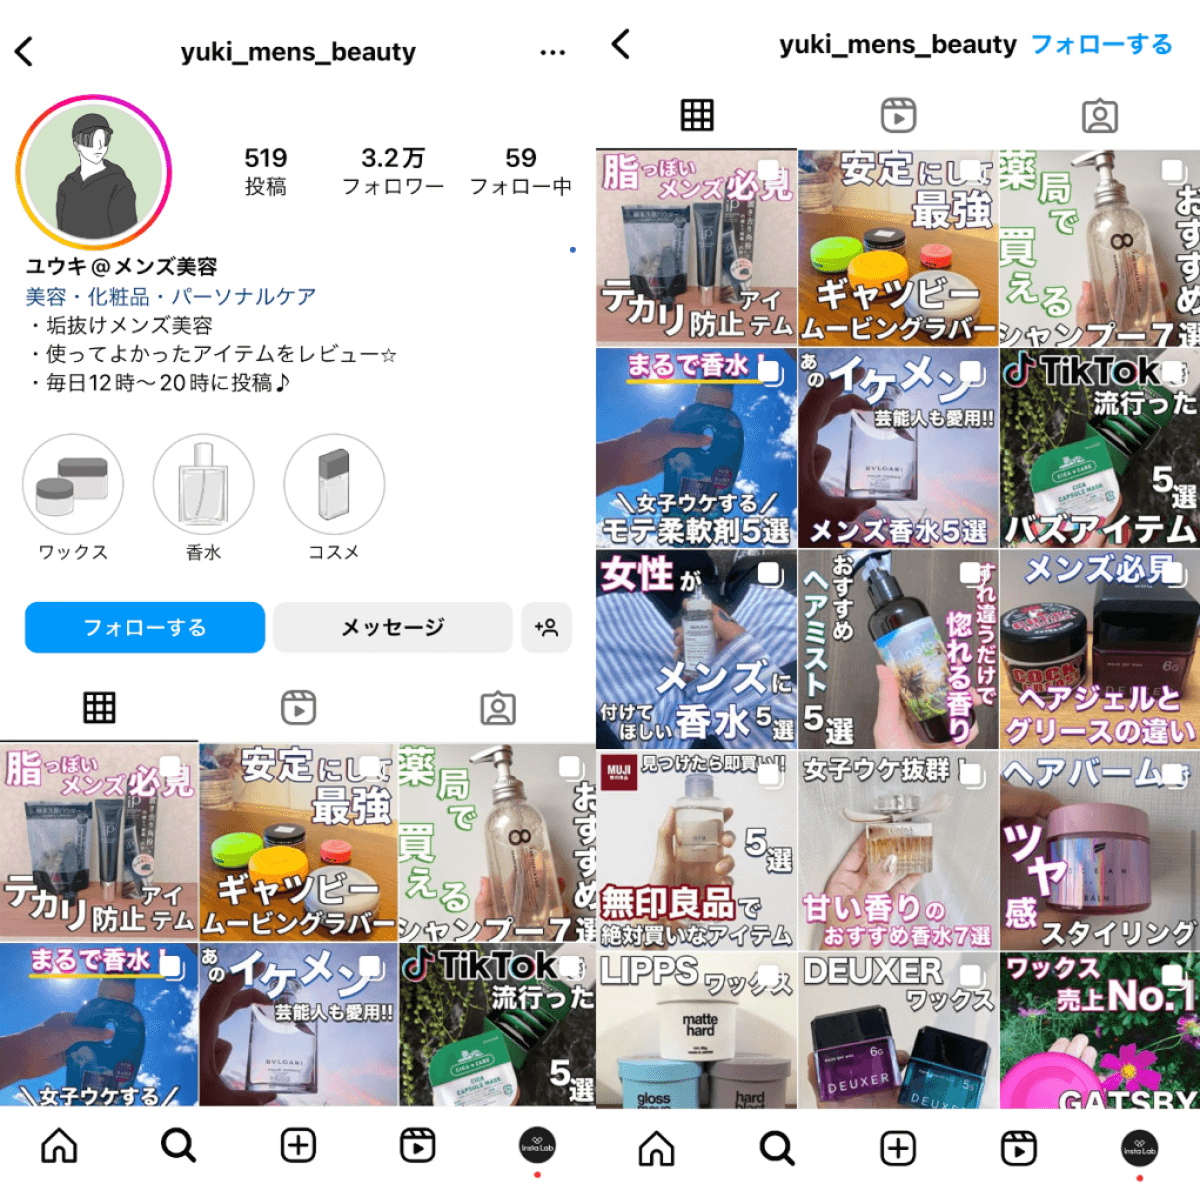 instagram-account-yuki-mens-beauty